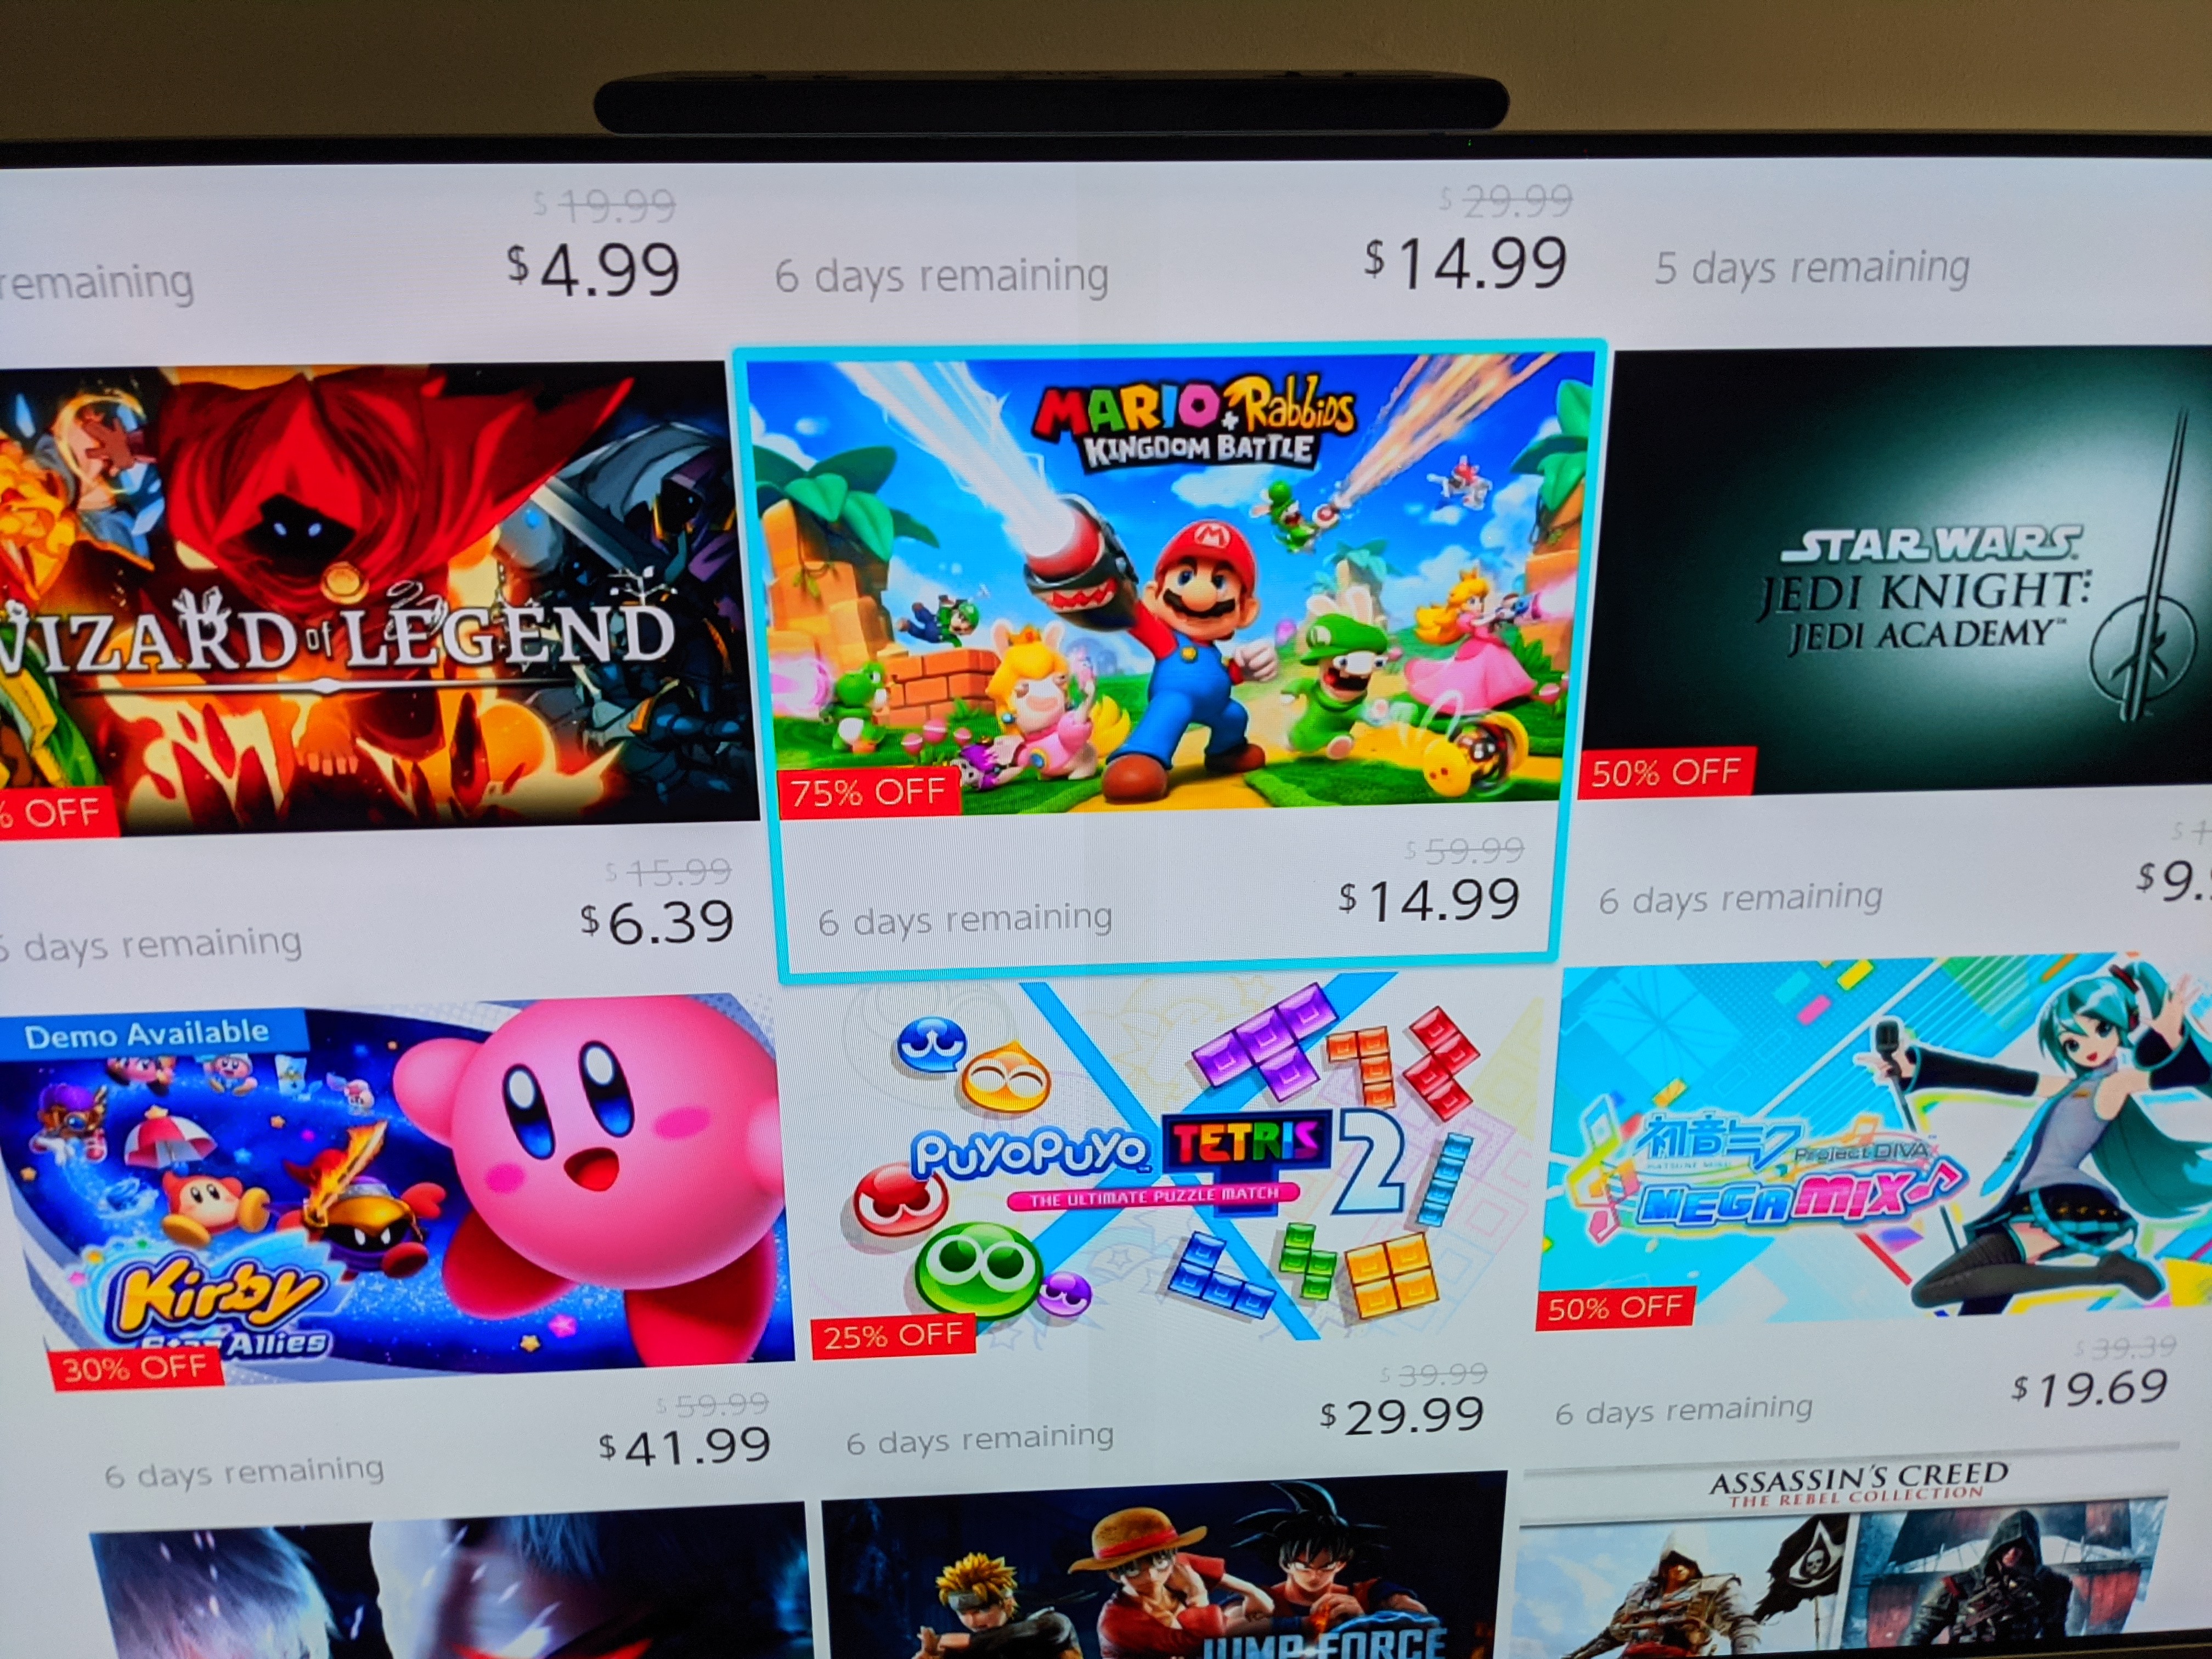 Mario + Rabbids Kingdom Battle (Nintendo Switch Digital Game) - $14.99 at eShop, Gold Edition for $19.99